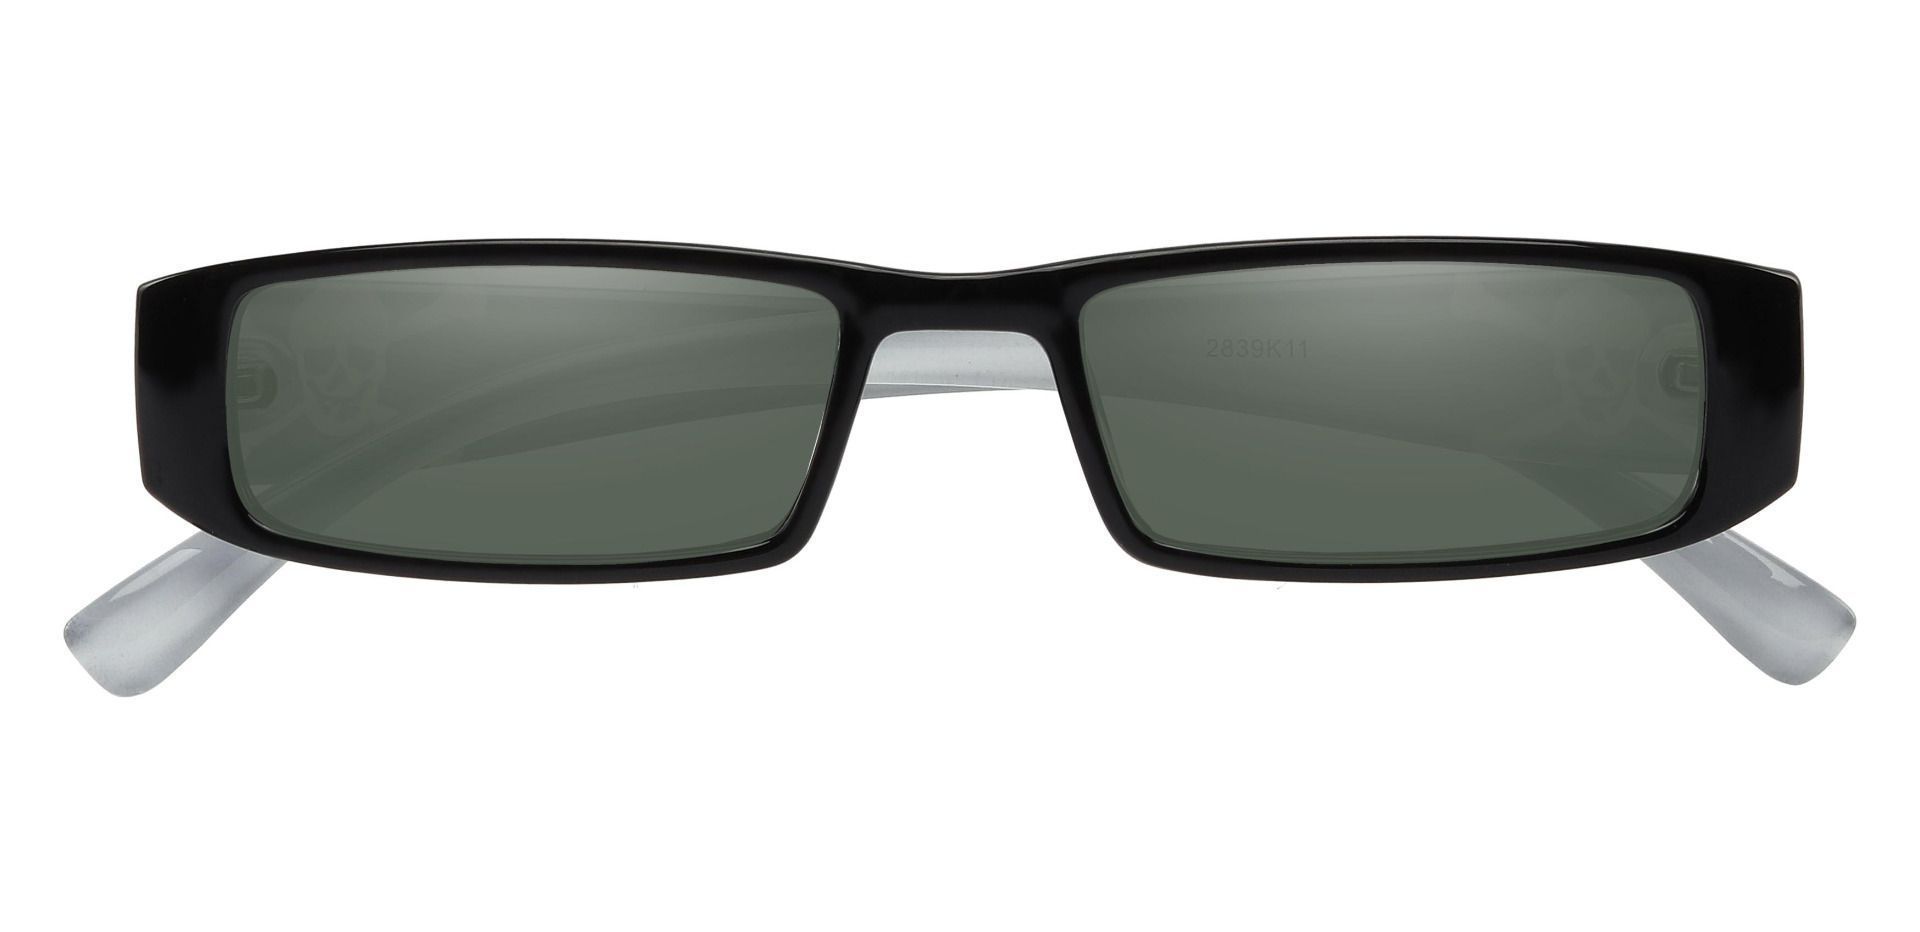 Buccaneer Rectangle Reading Sunglasses - Black Frame With Green Lenses